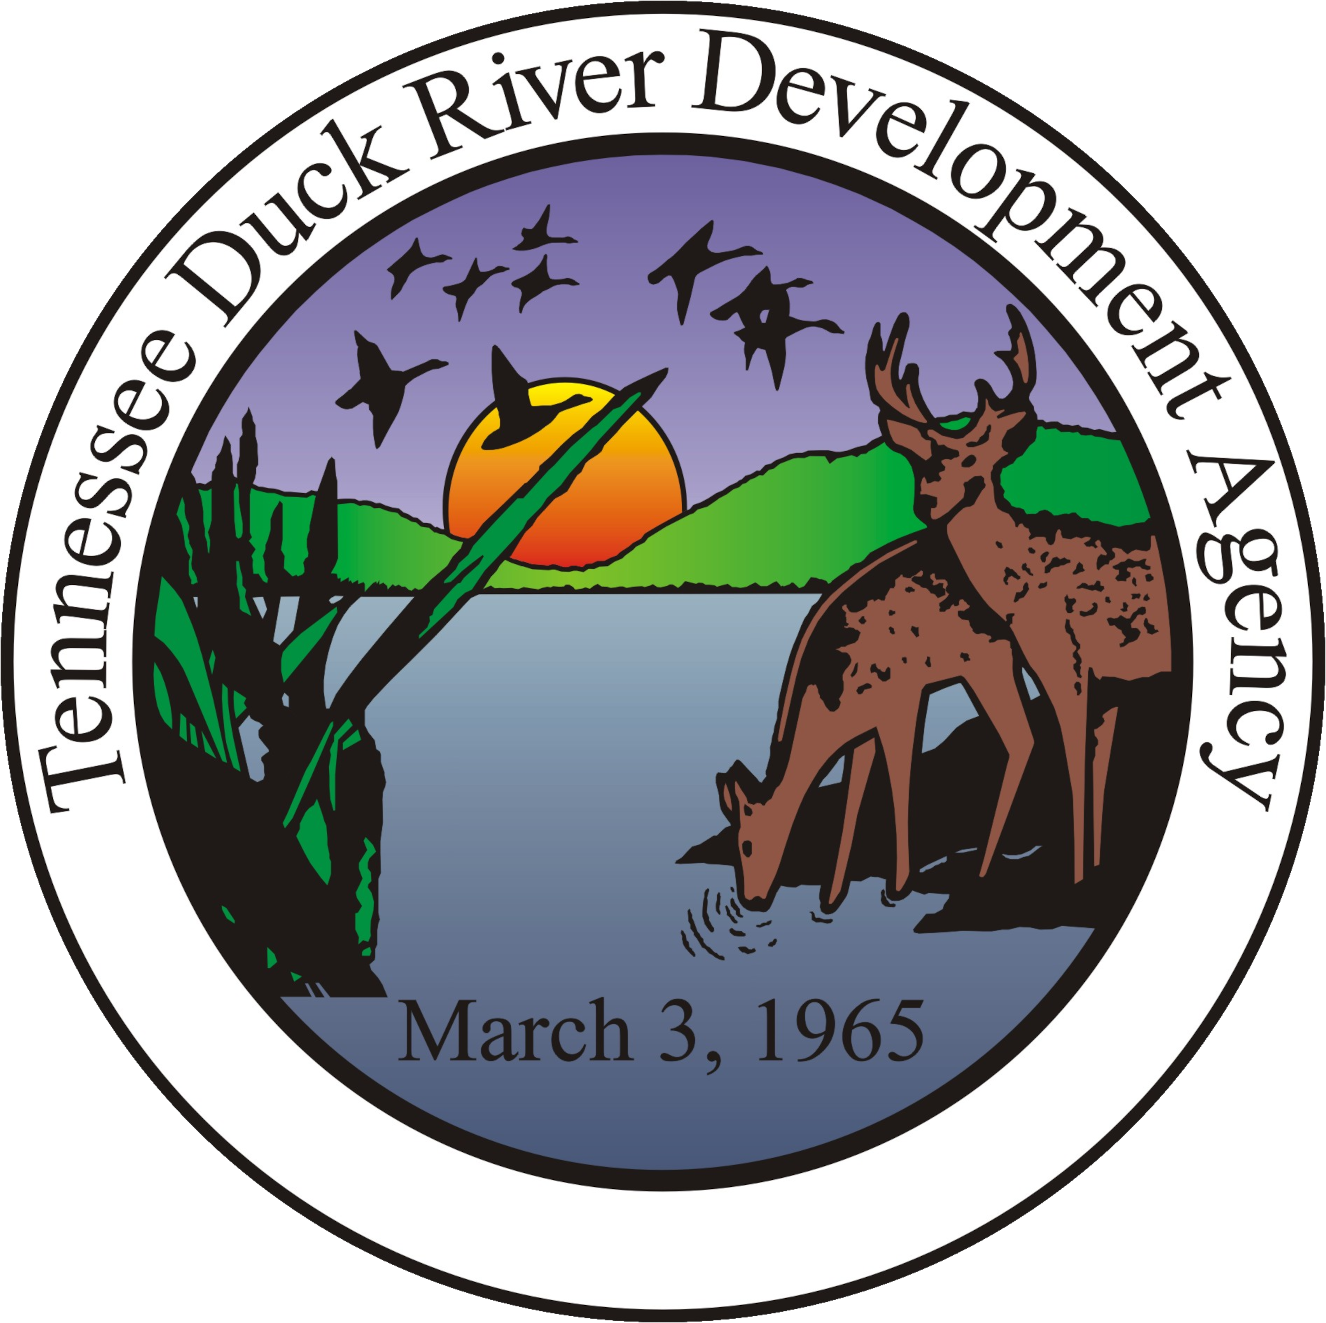 The Duck River Agency, TN logo